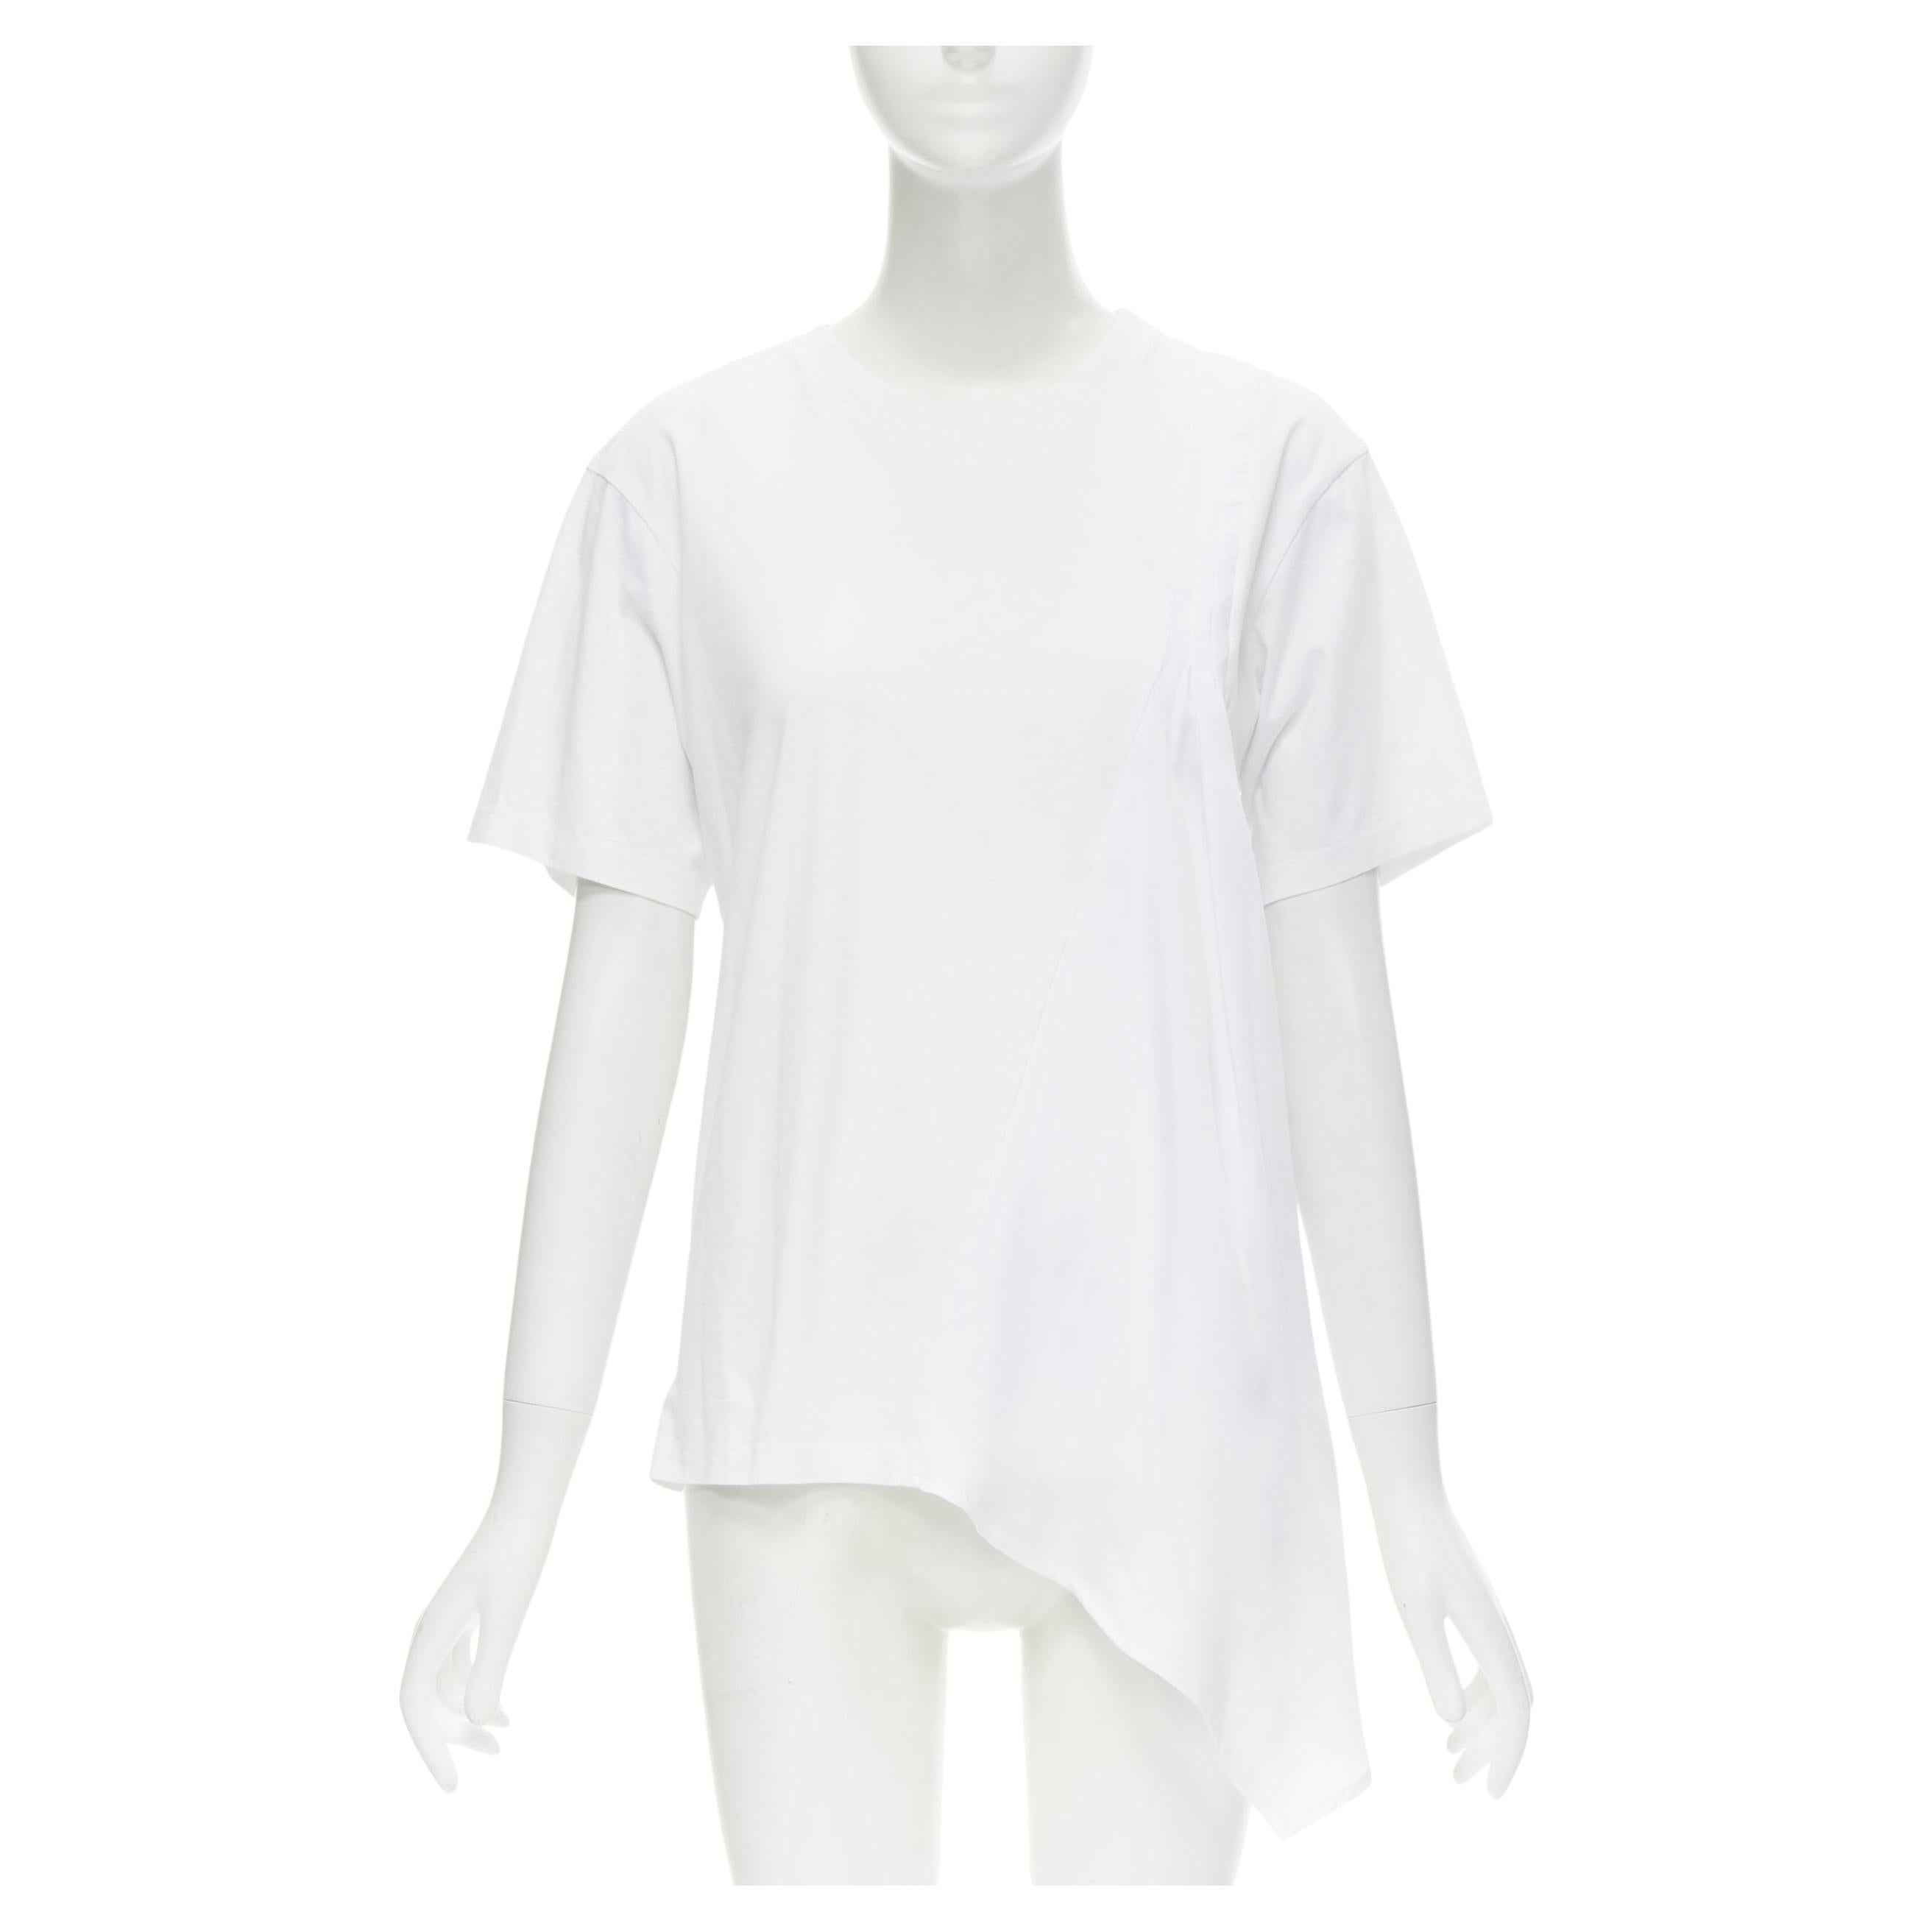 VVB VICTORIA BECKHAM 100% cotton polyester insert asymmetric t-shirt S For Sale